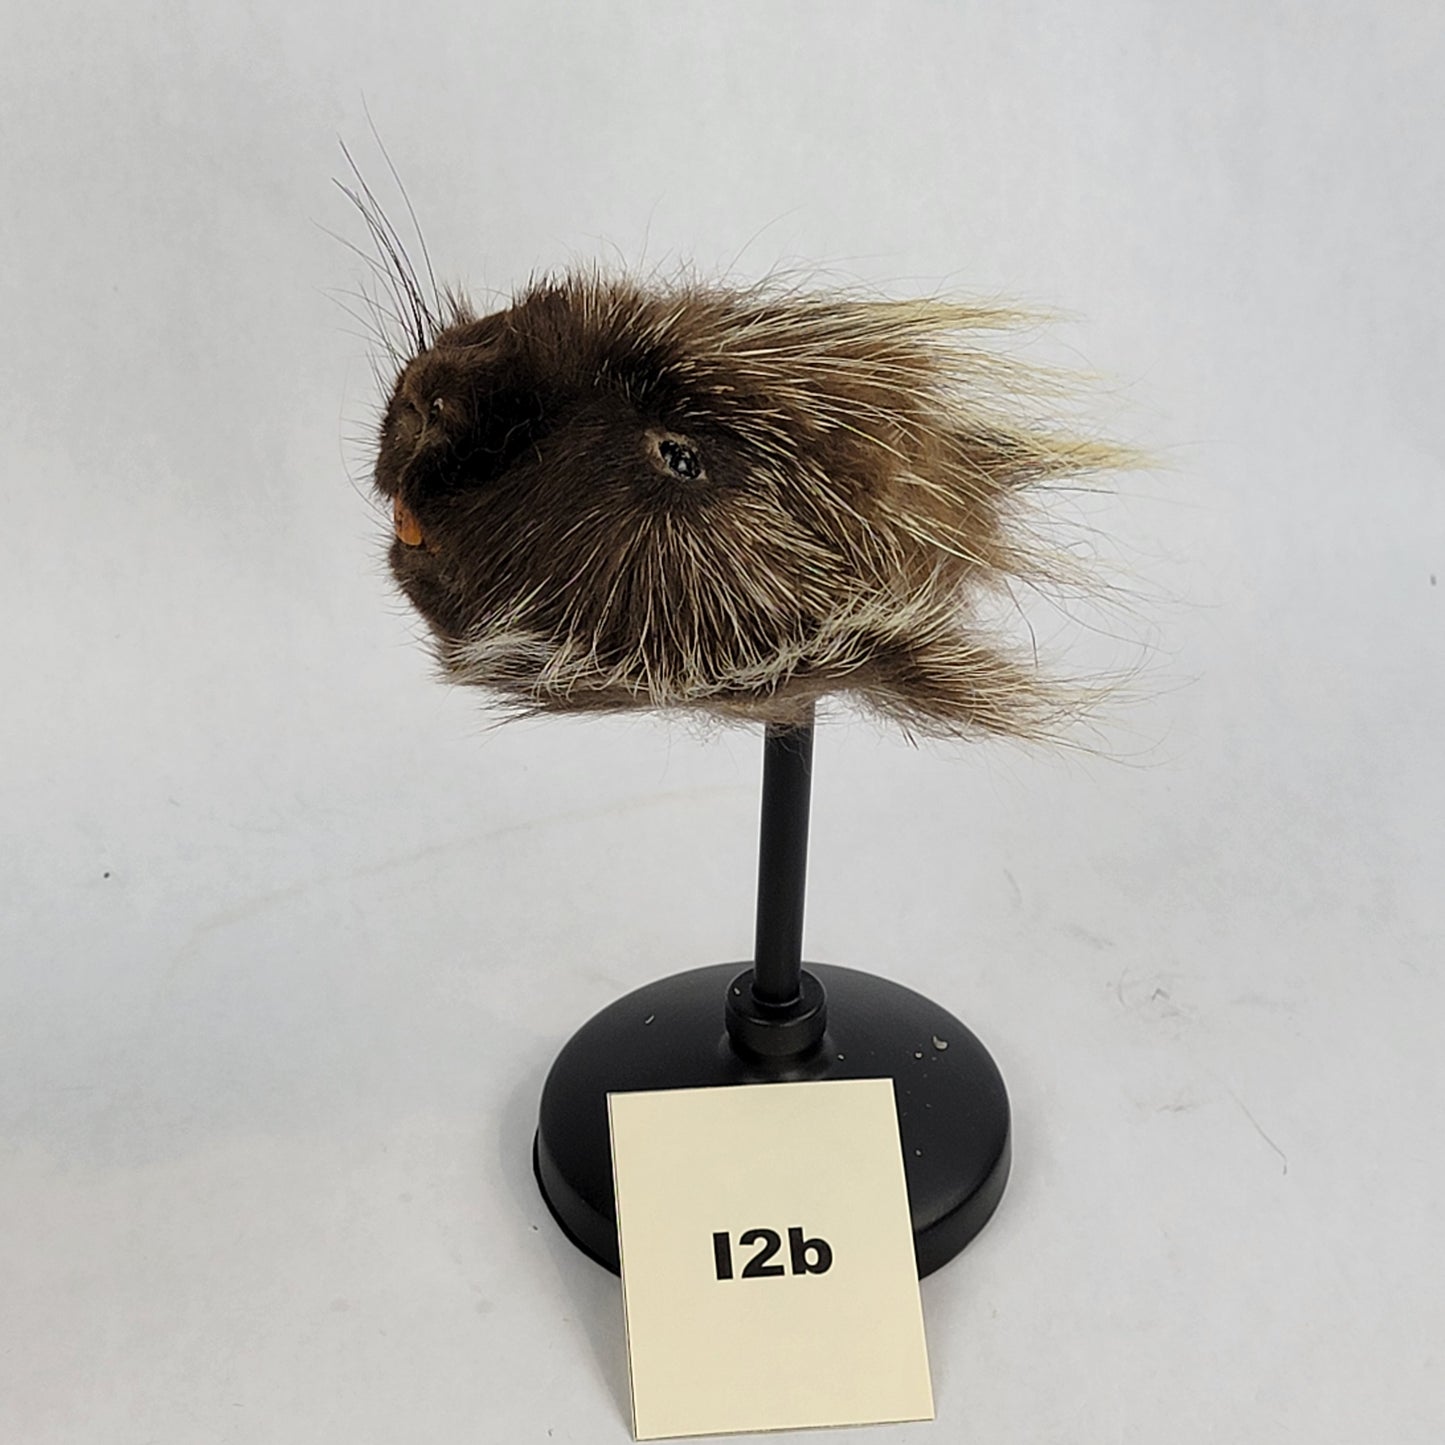 I2b Anthropomorphic Porcupine Doll Deposit